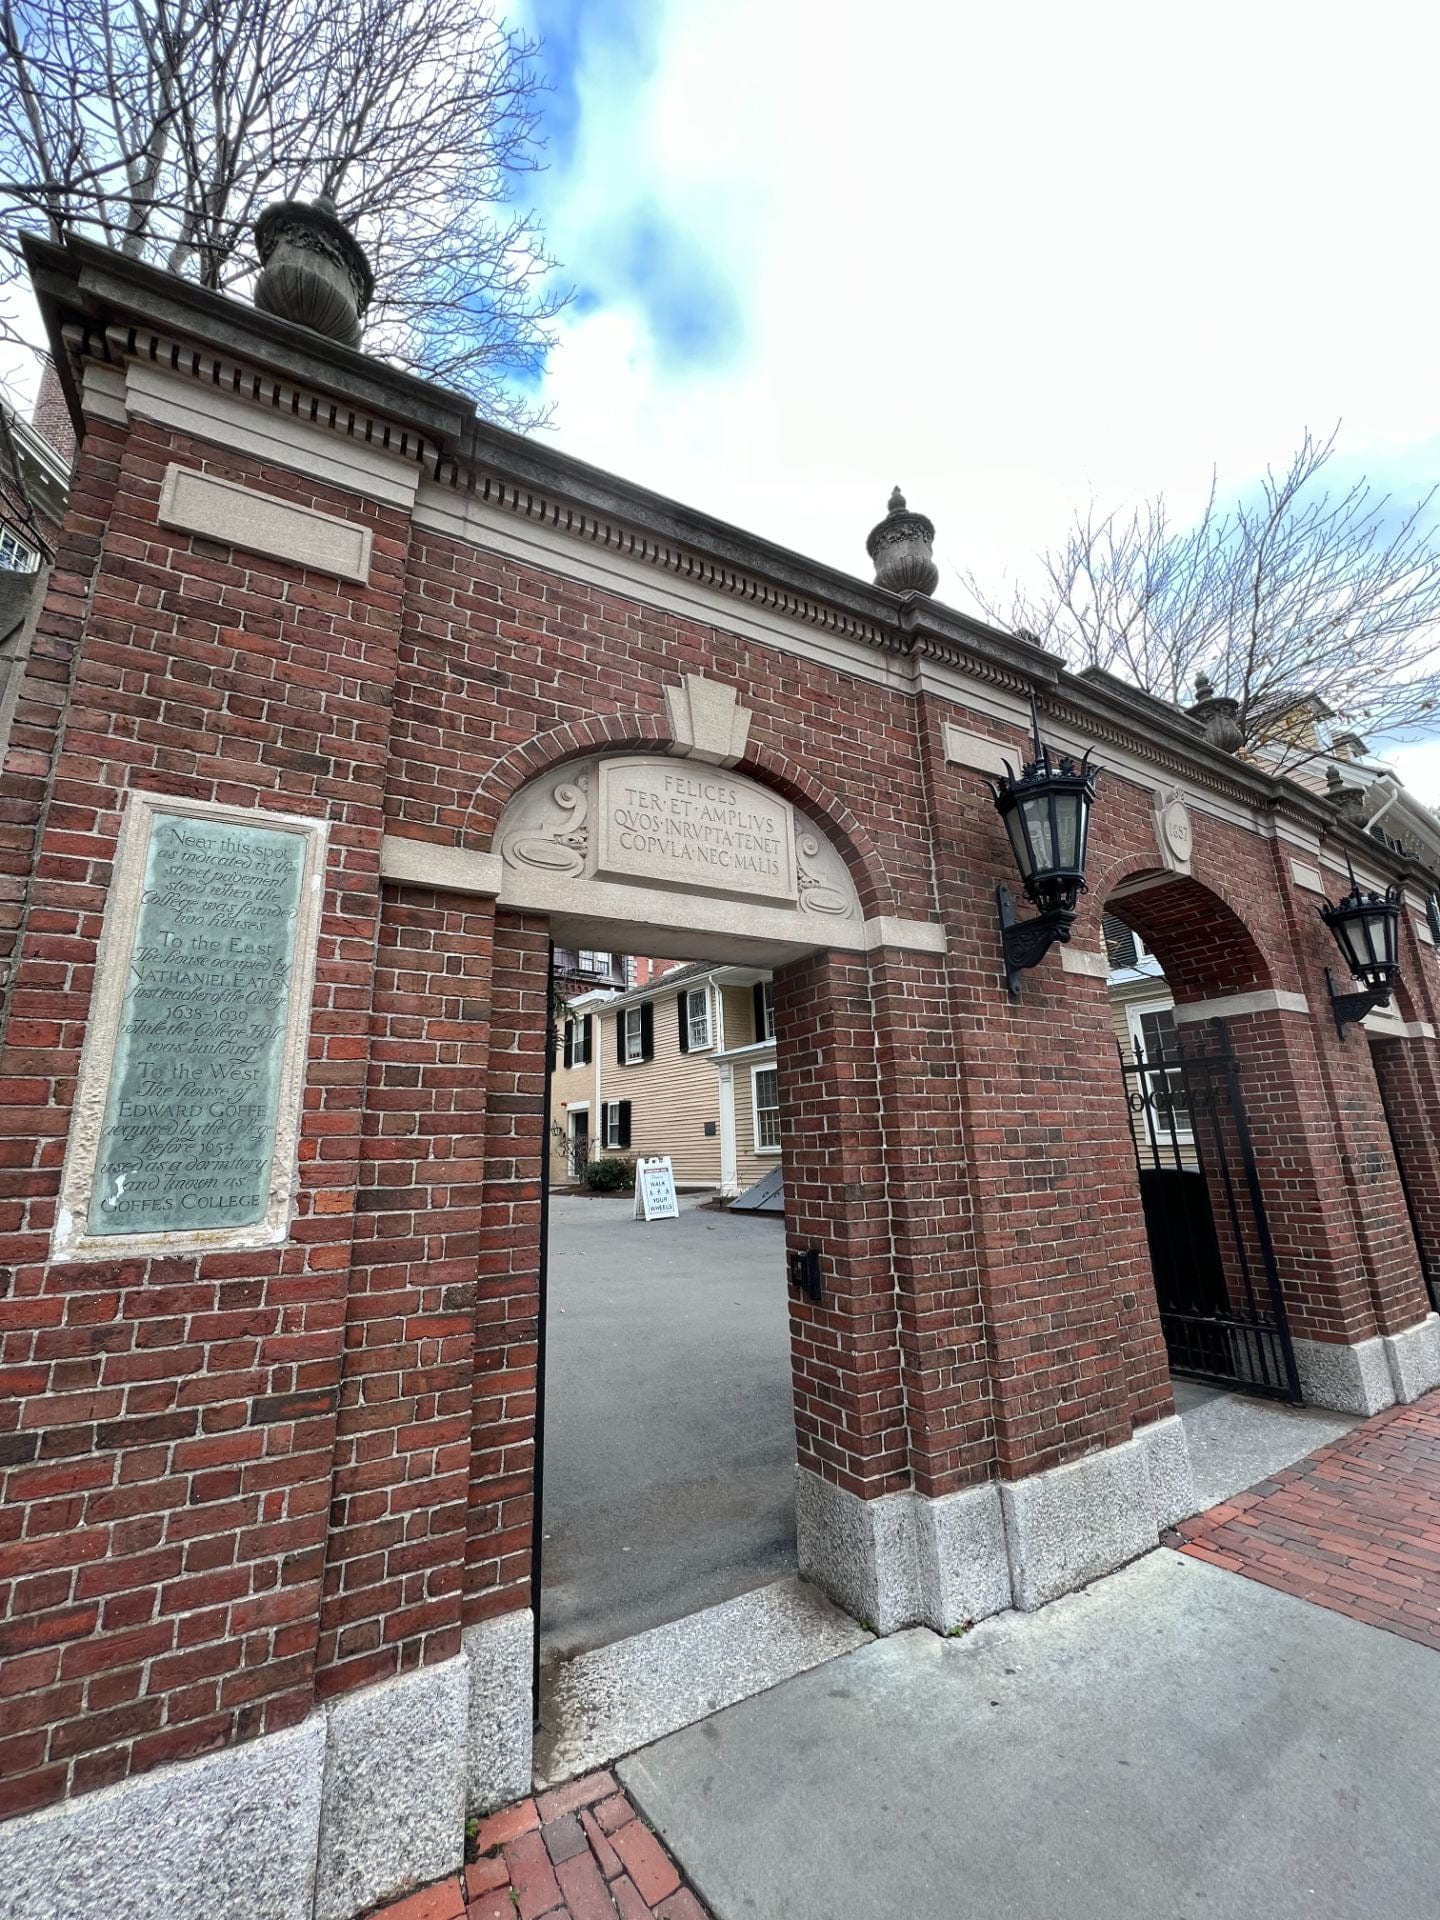 Brick archway leading into Harvard Yard